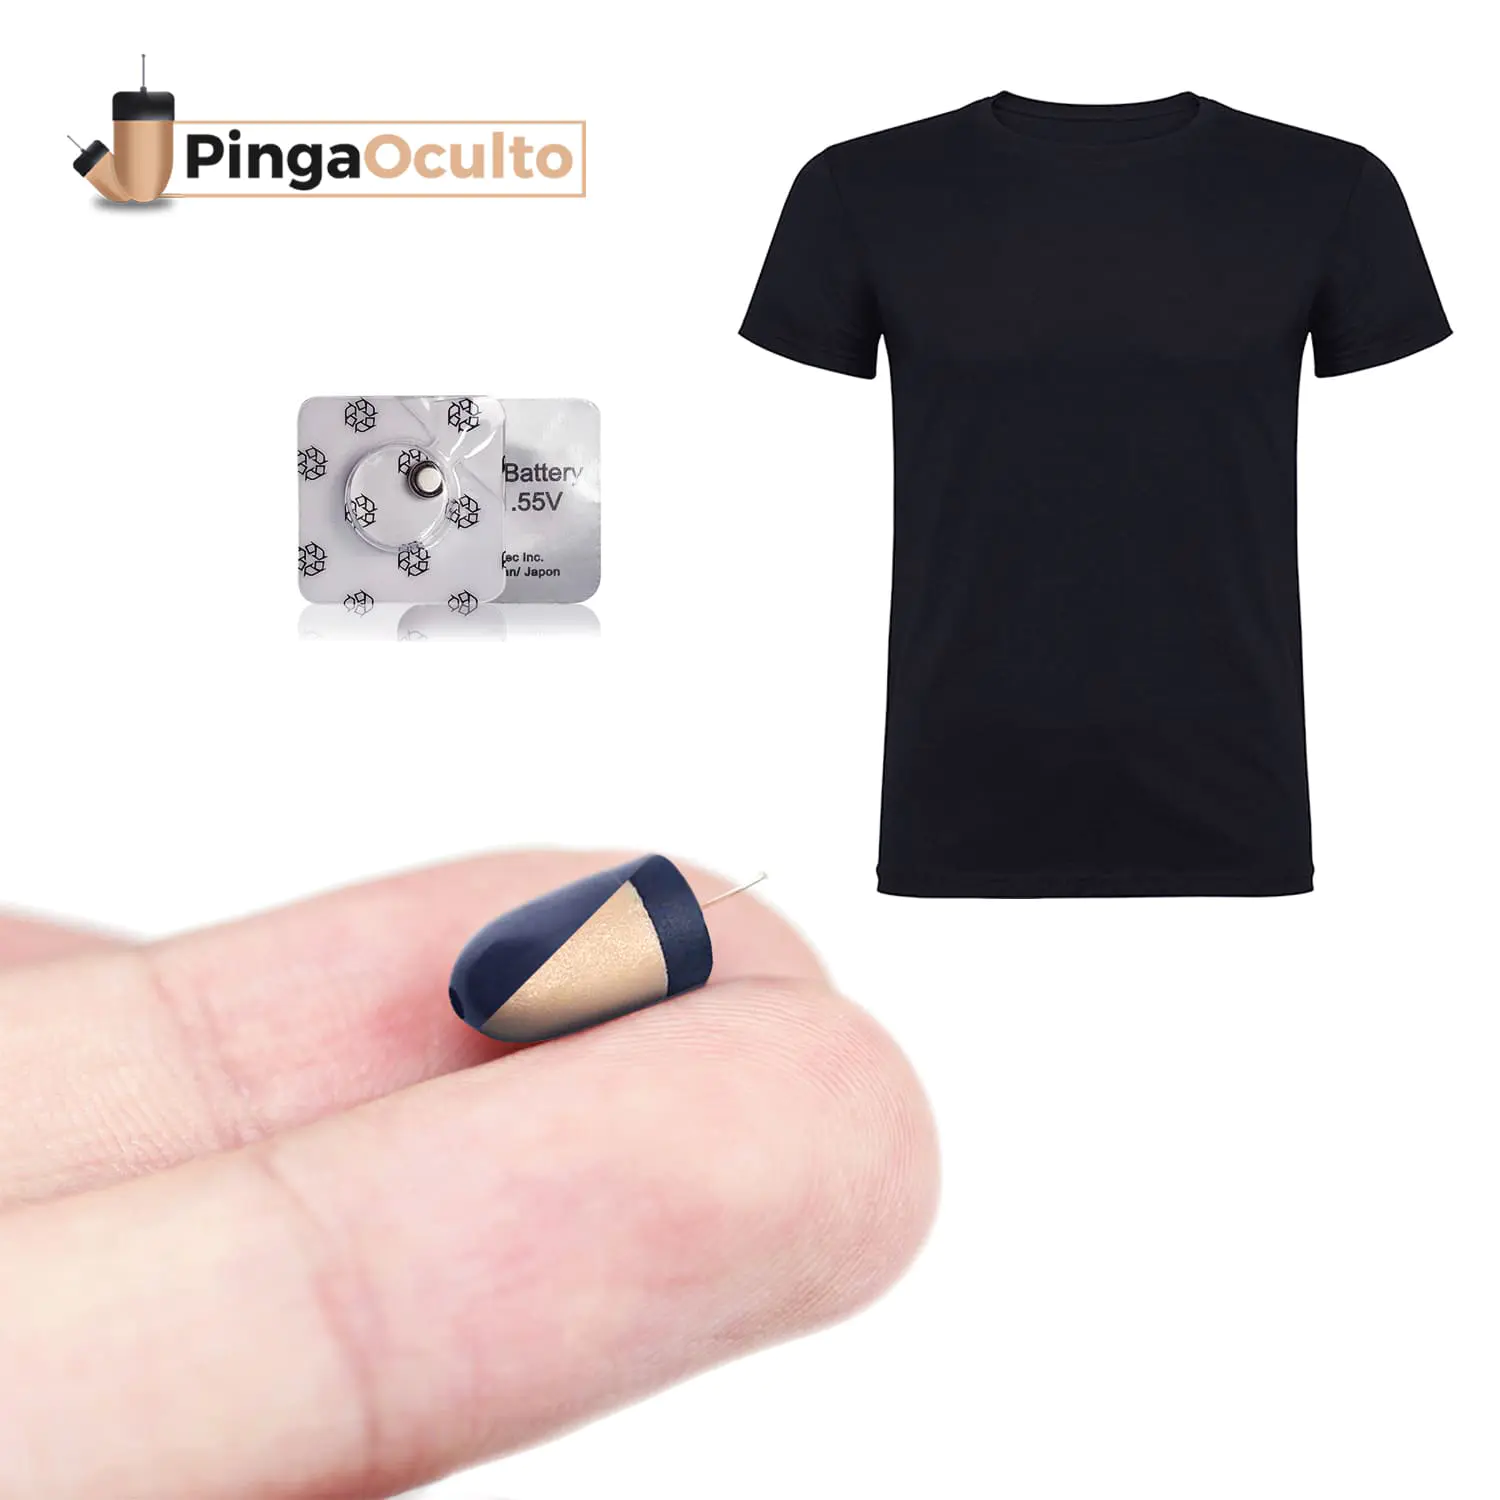 Pinganillo Vip Pro Mini - PingaOculto ®